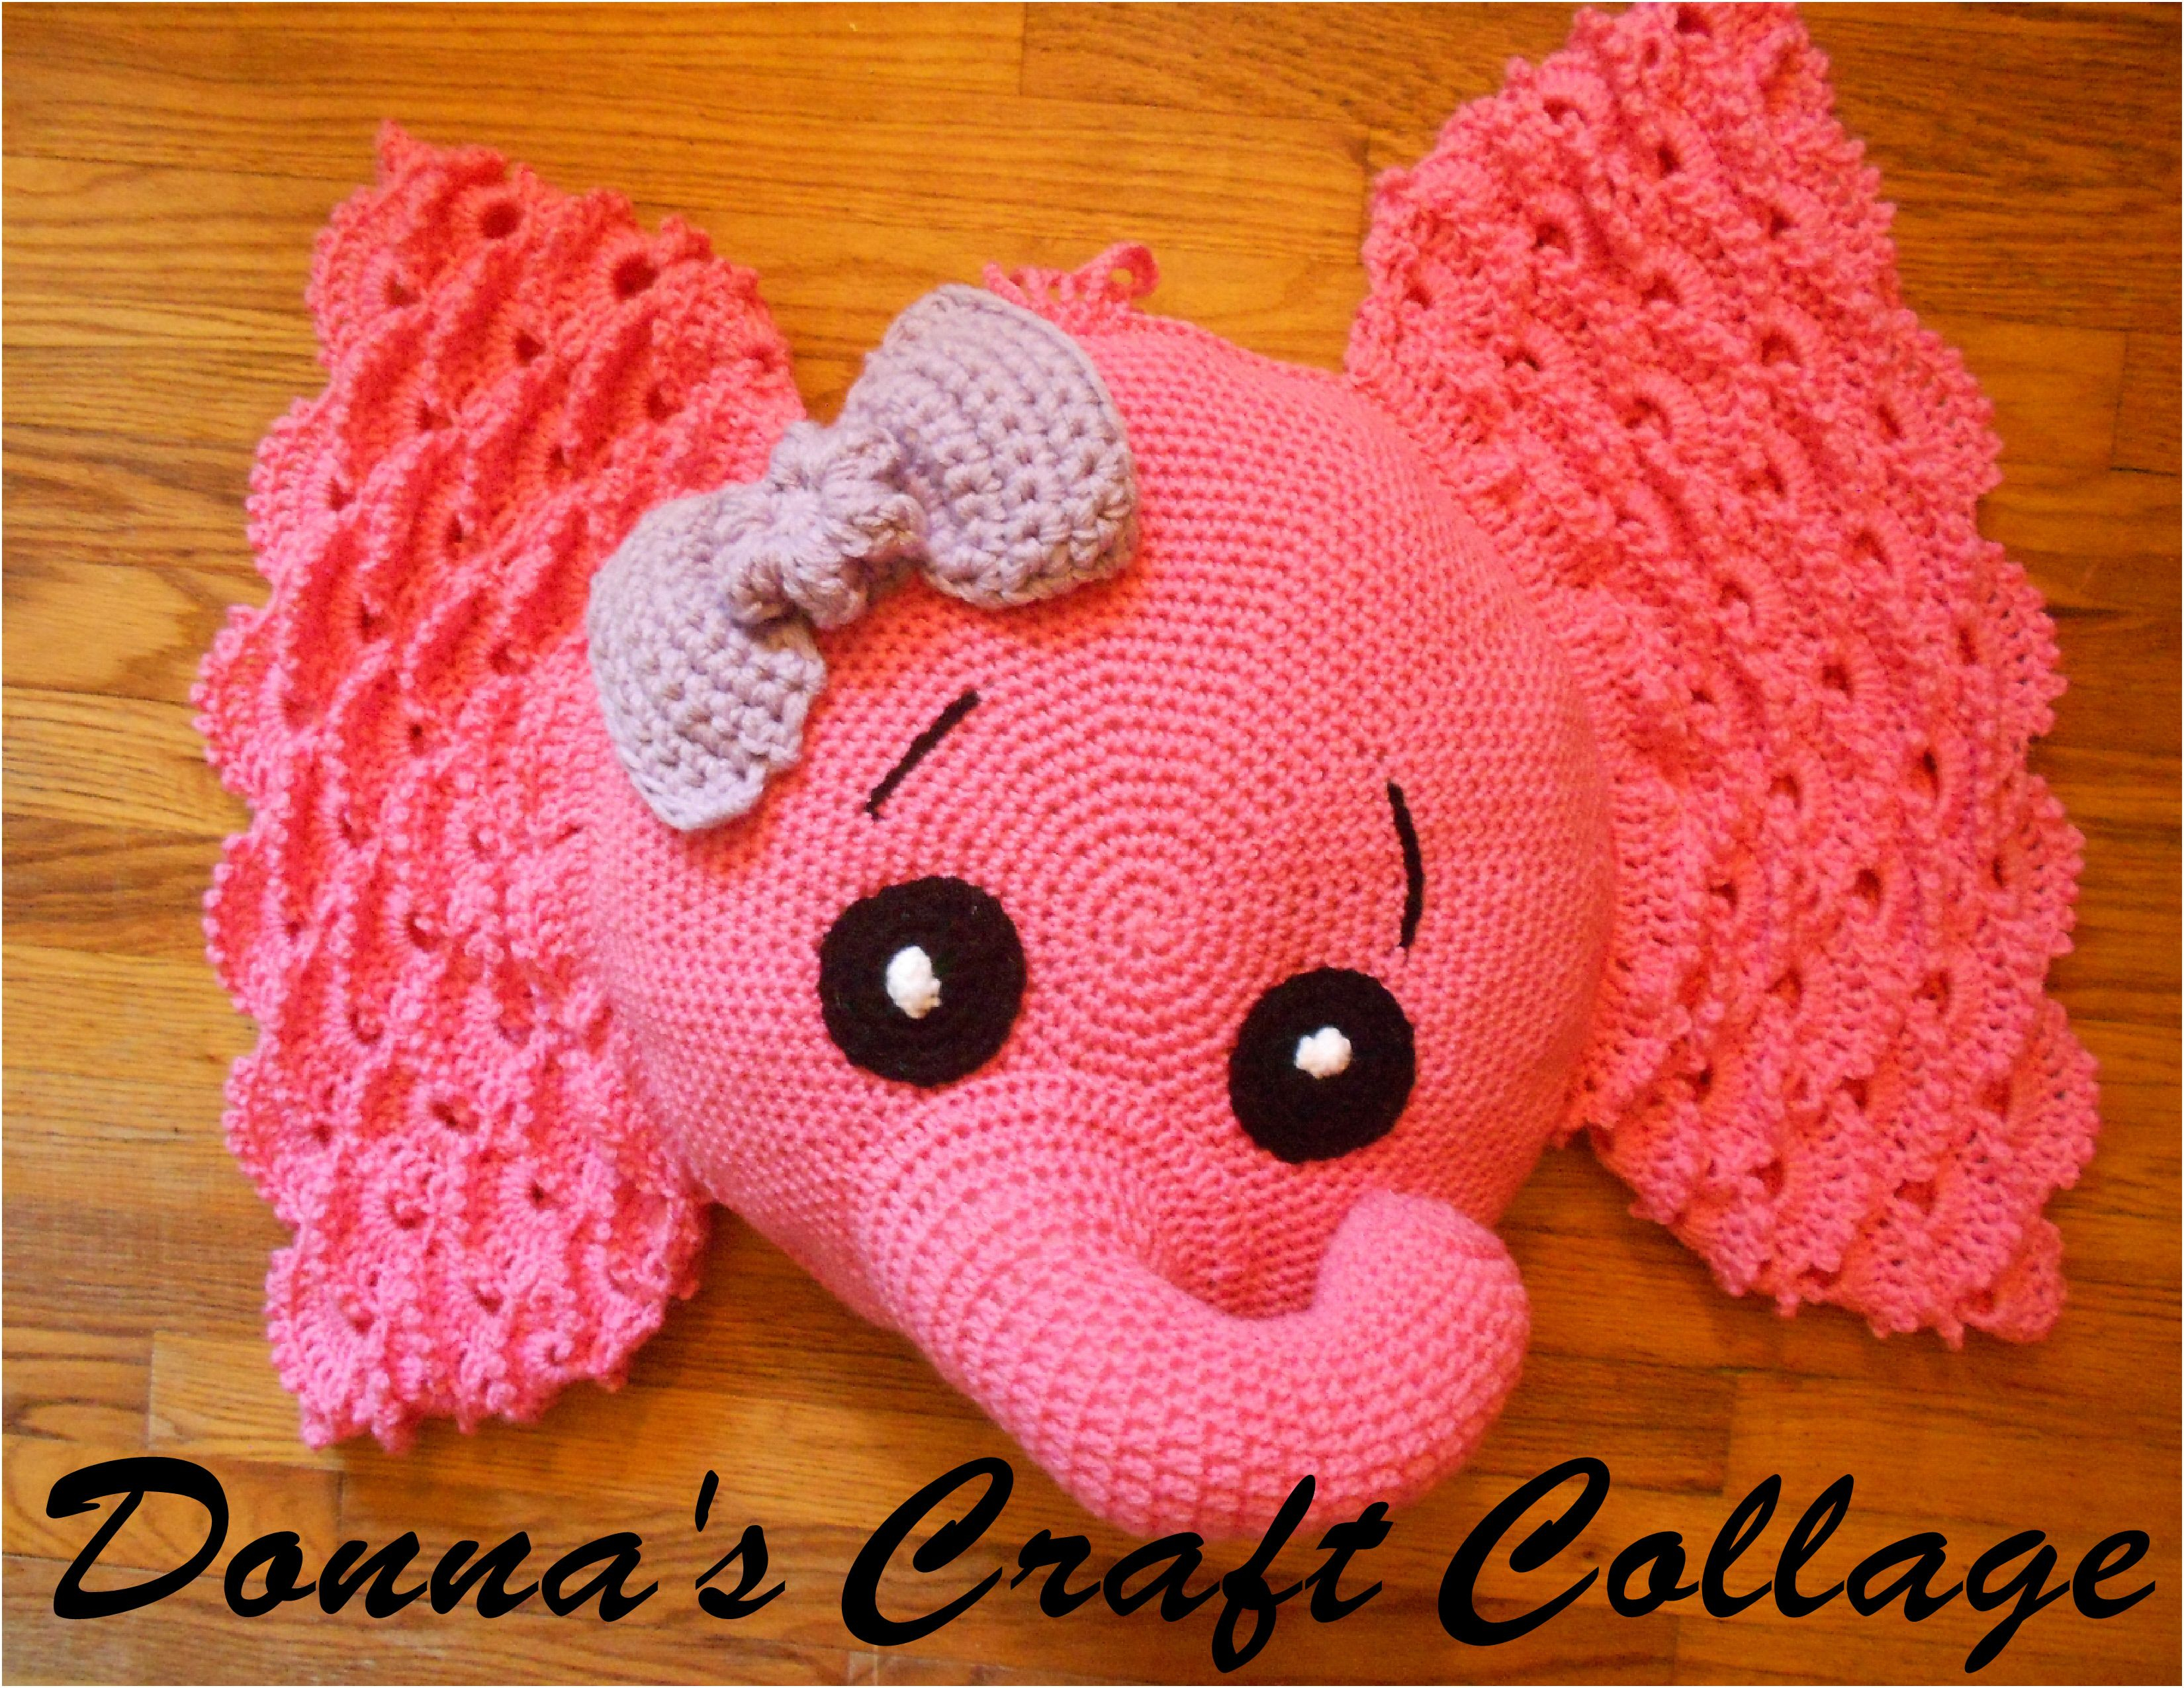 Crochet Elephant Pillow Pattern Crocheted Elephant Pillow Pattern From Ira Rott Nursery Decor